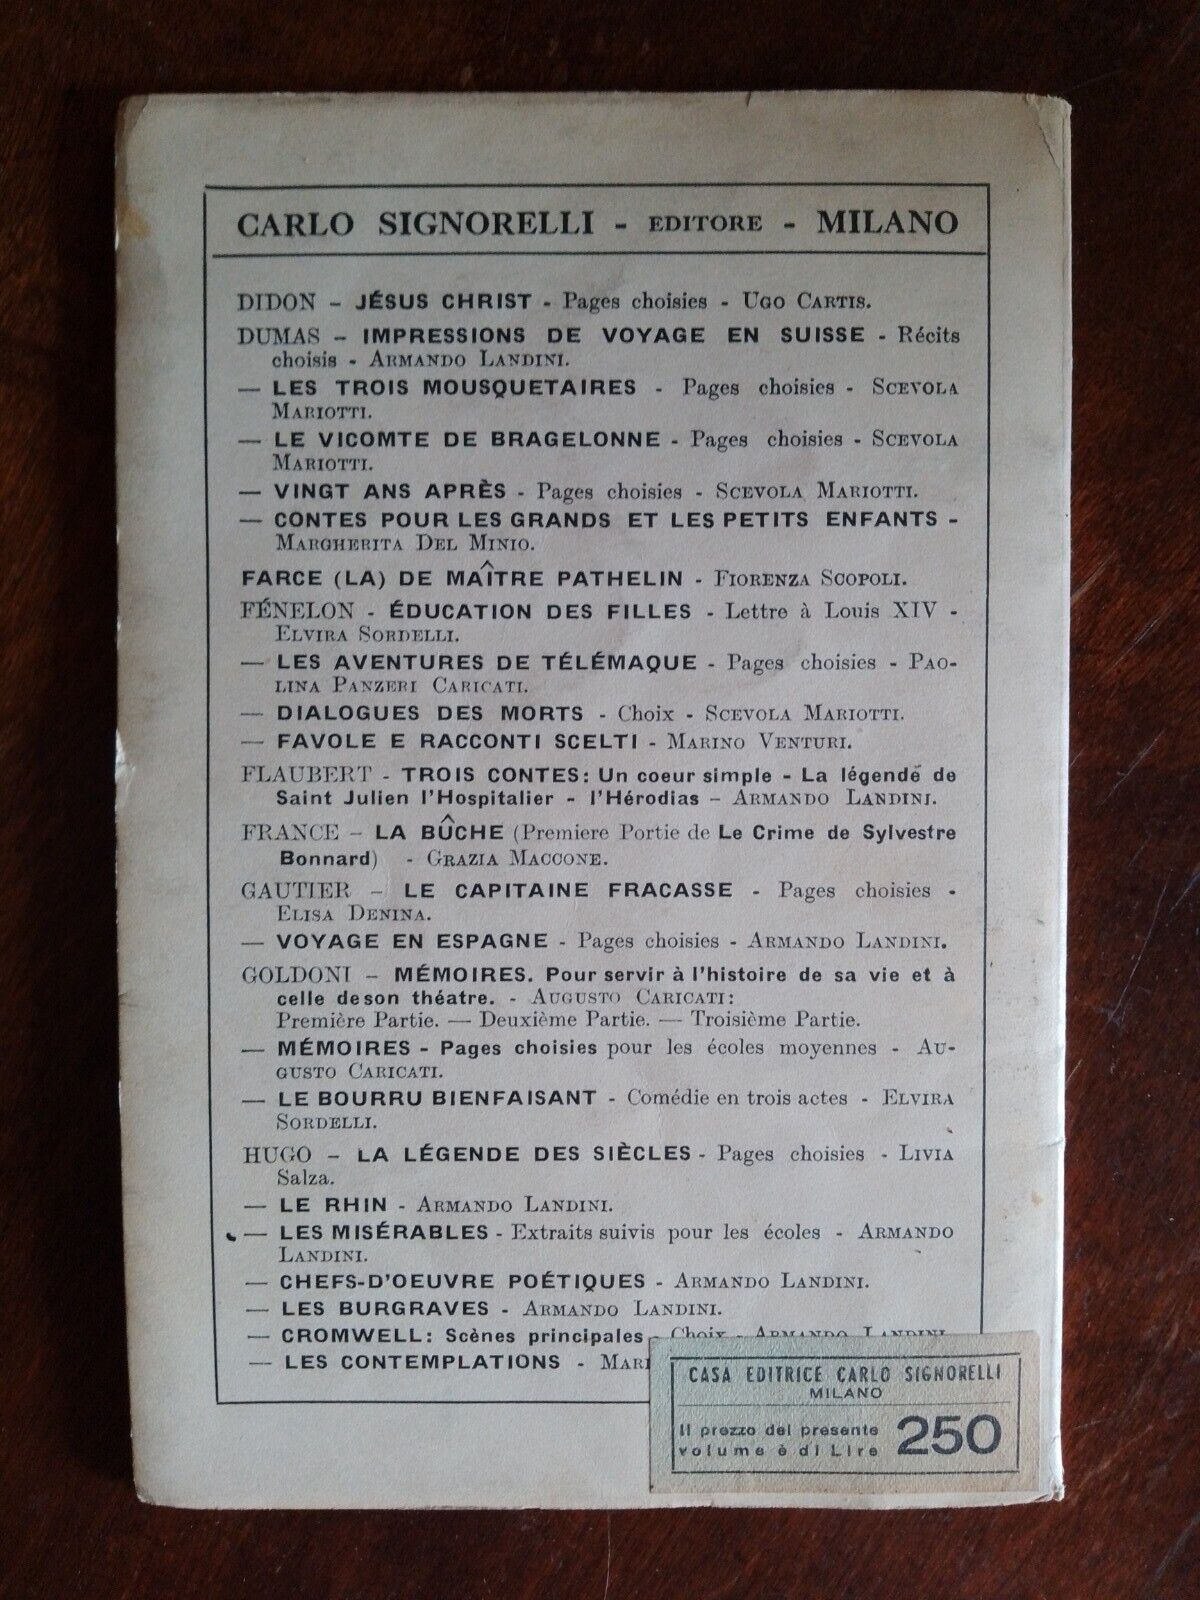 Le petite chose - A. Daudet, parte prima e seconda, Signorelli 1951